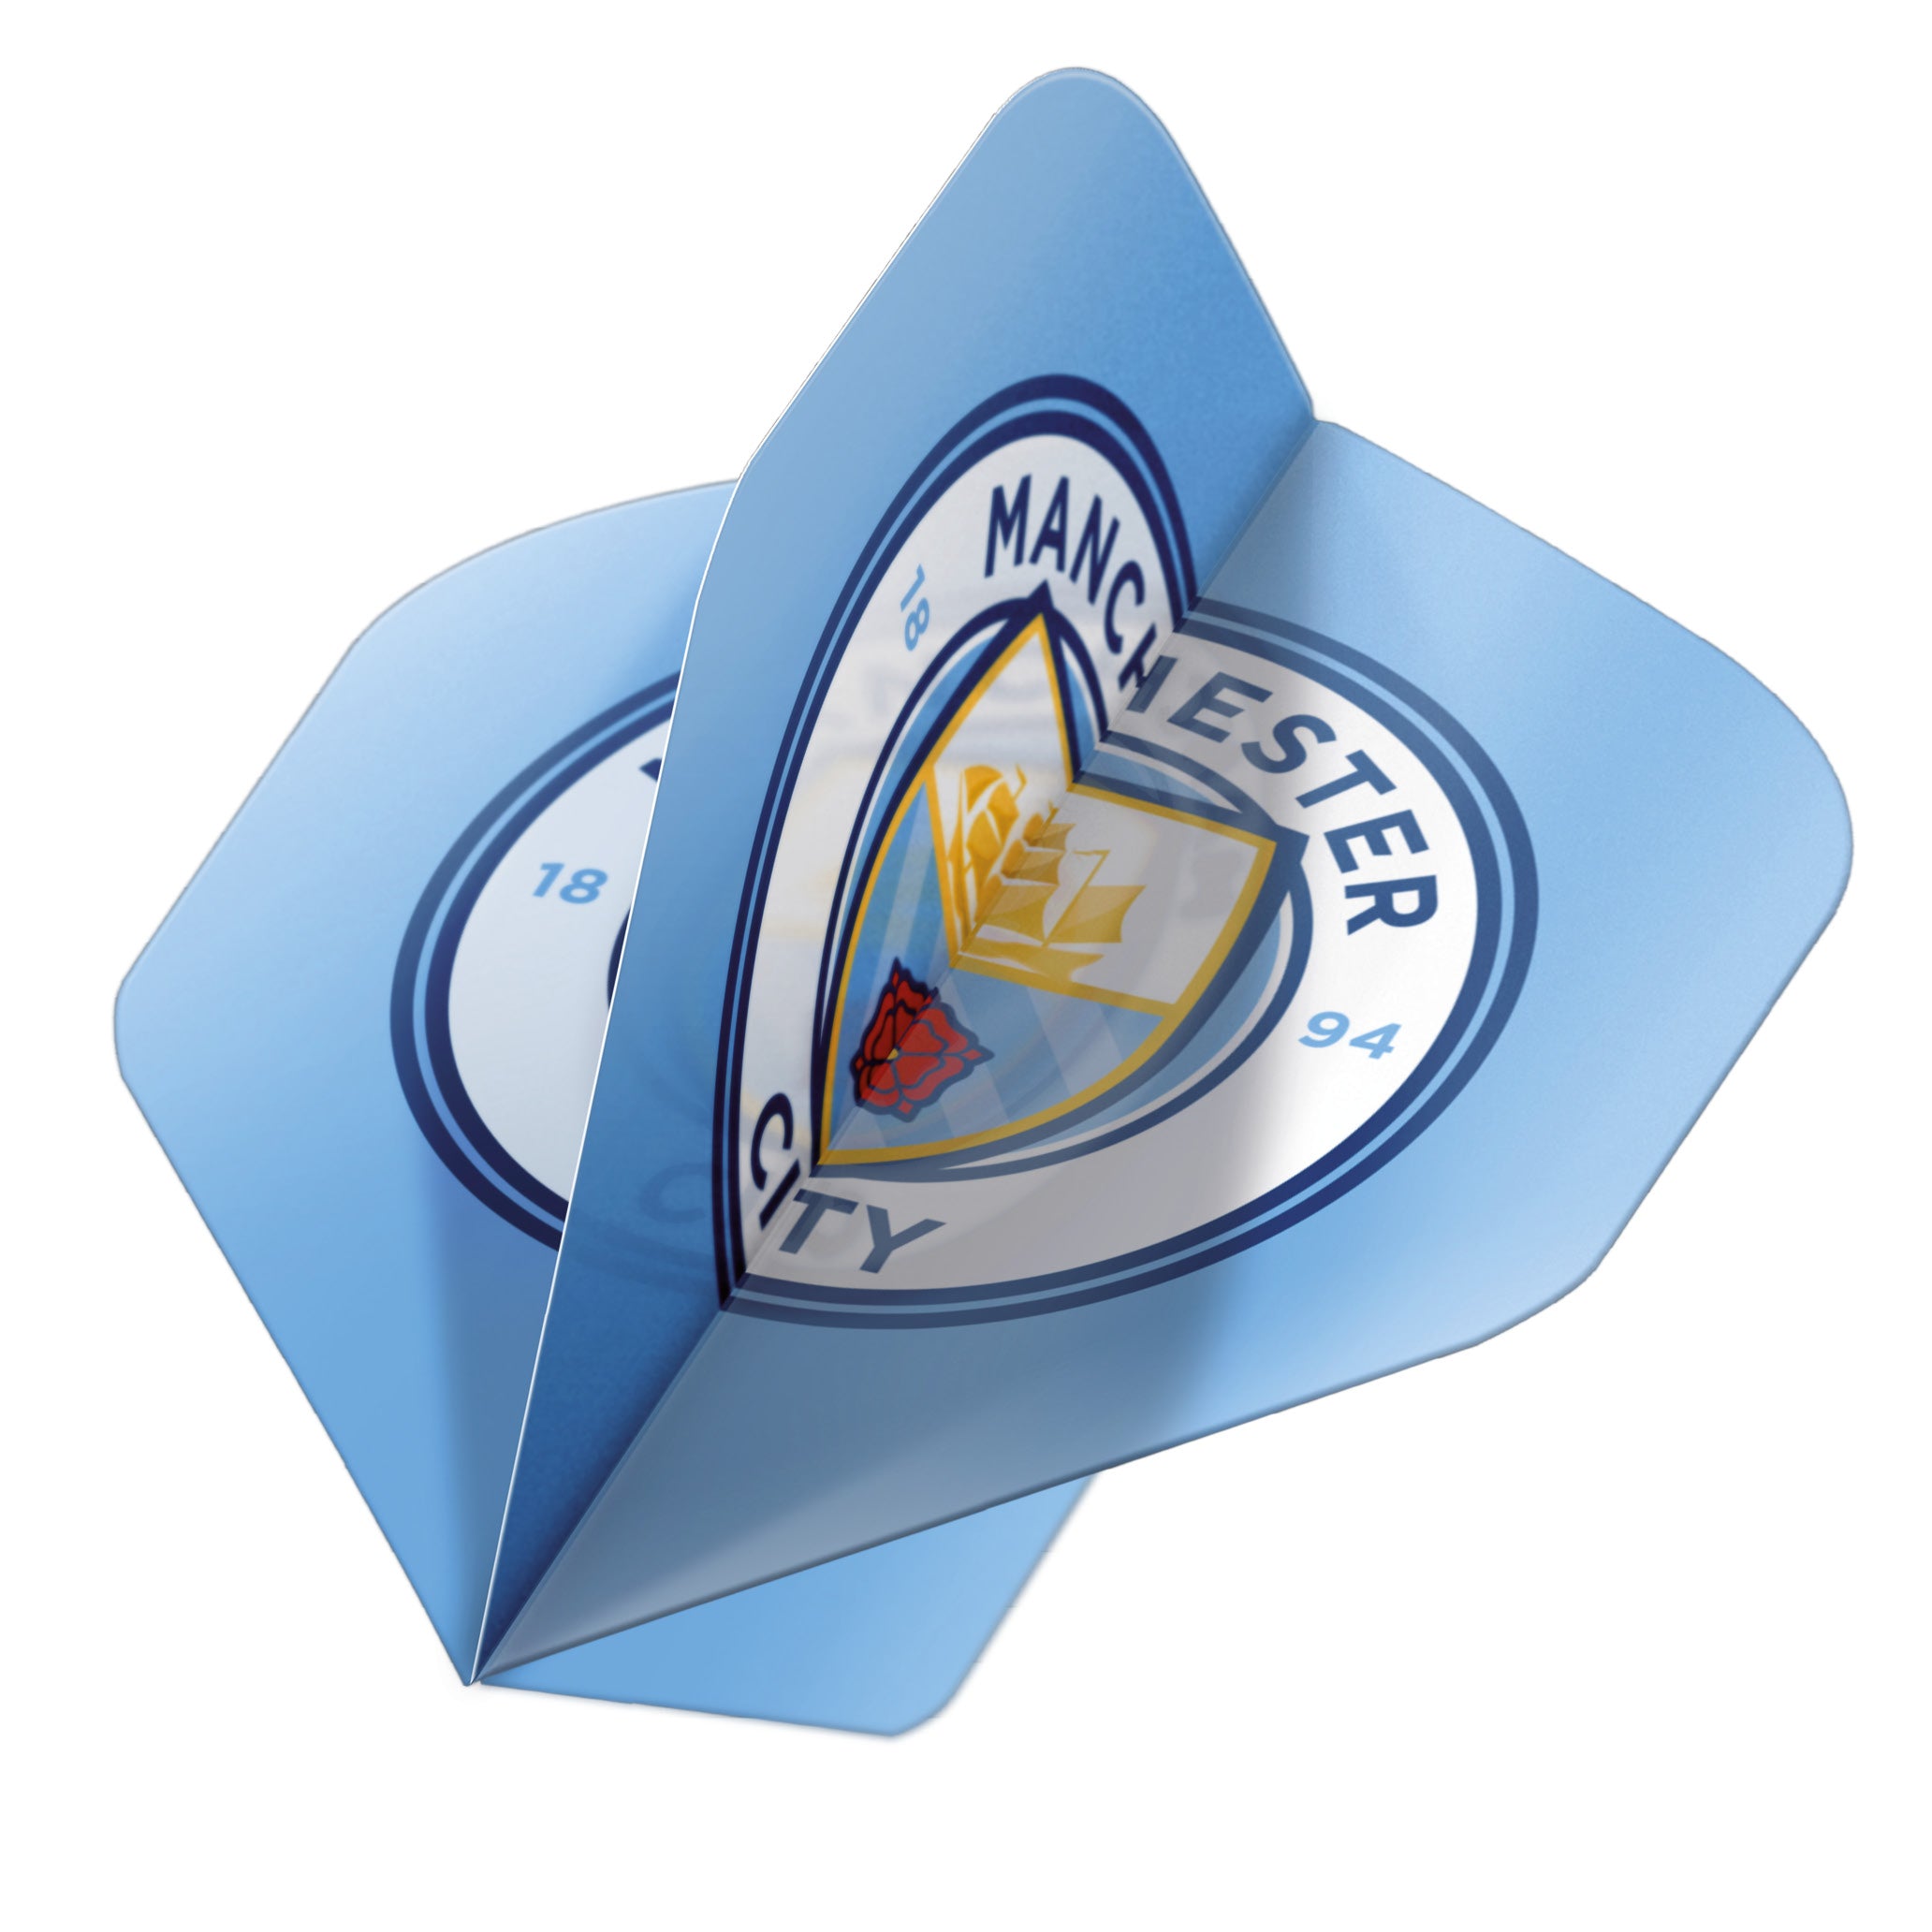 Manchester City Football Club Standard